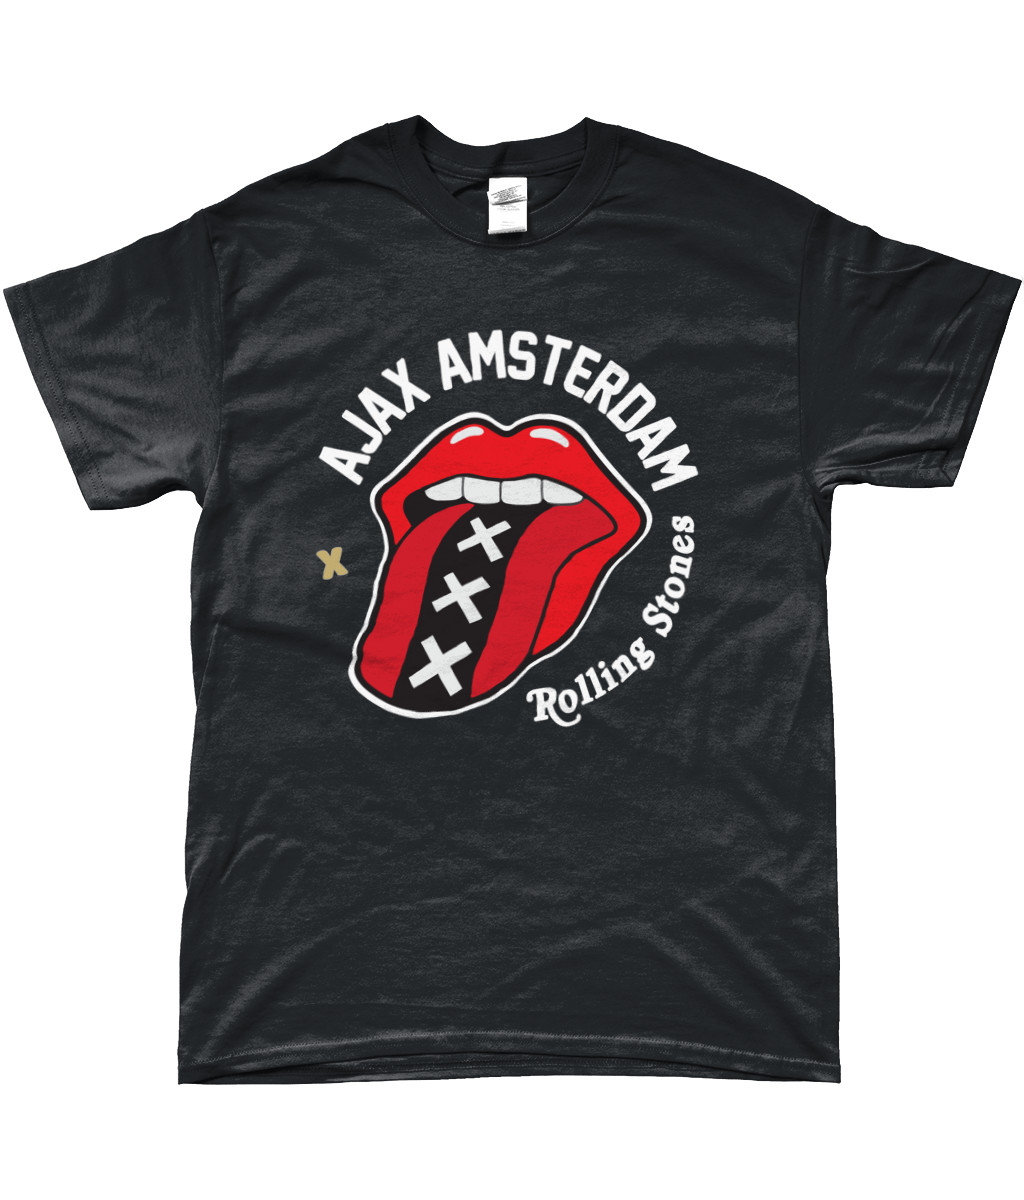 Ajax - Rolling Stones T-shirt